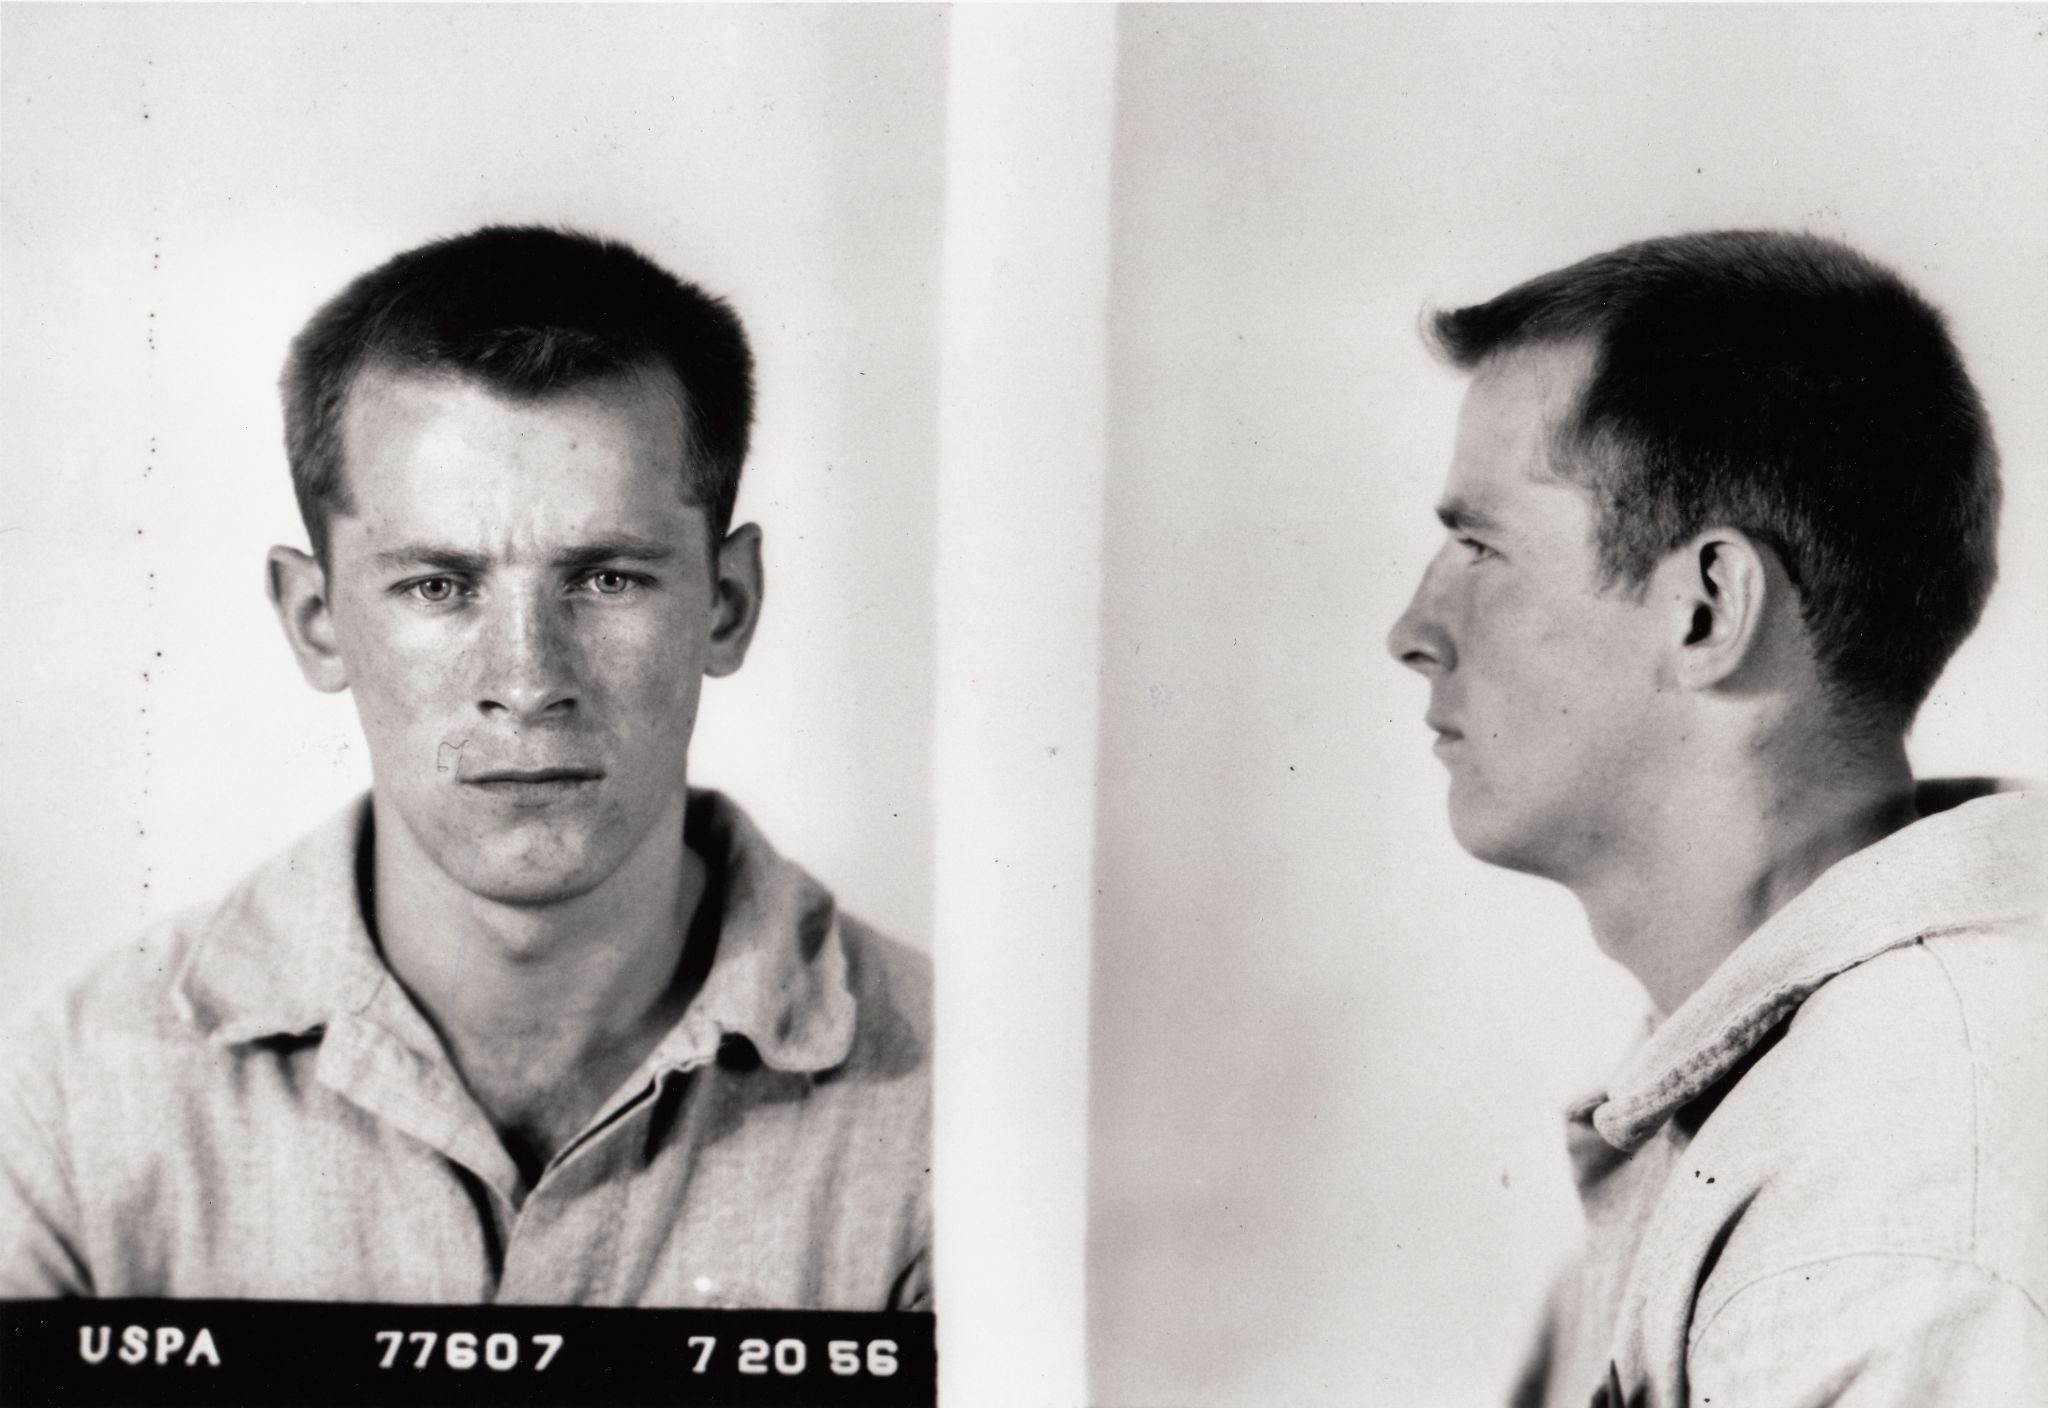 Mugshots of James “Whitey” Bulger from 1956 and 2011.